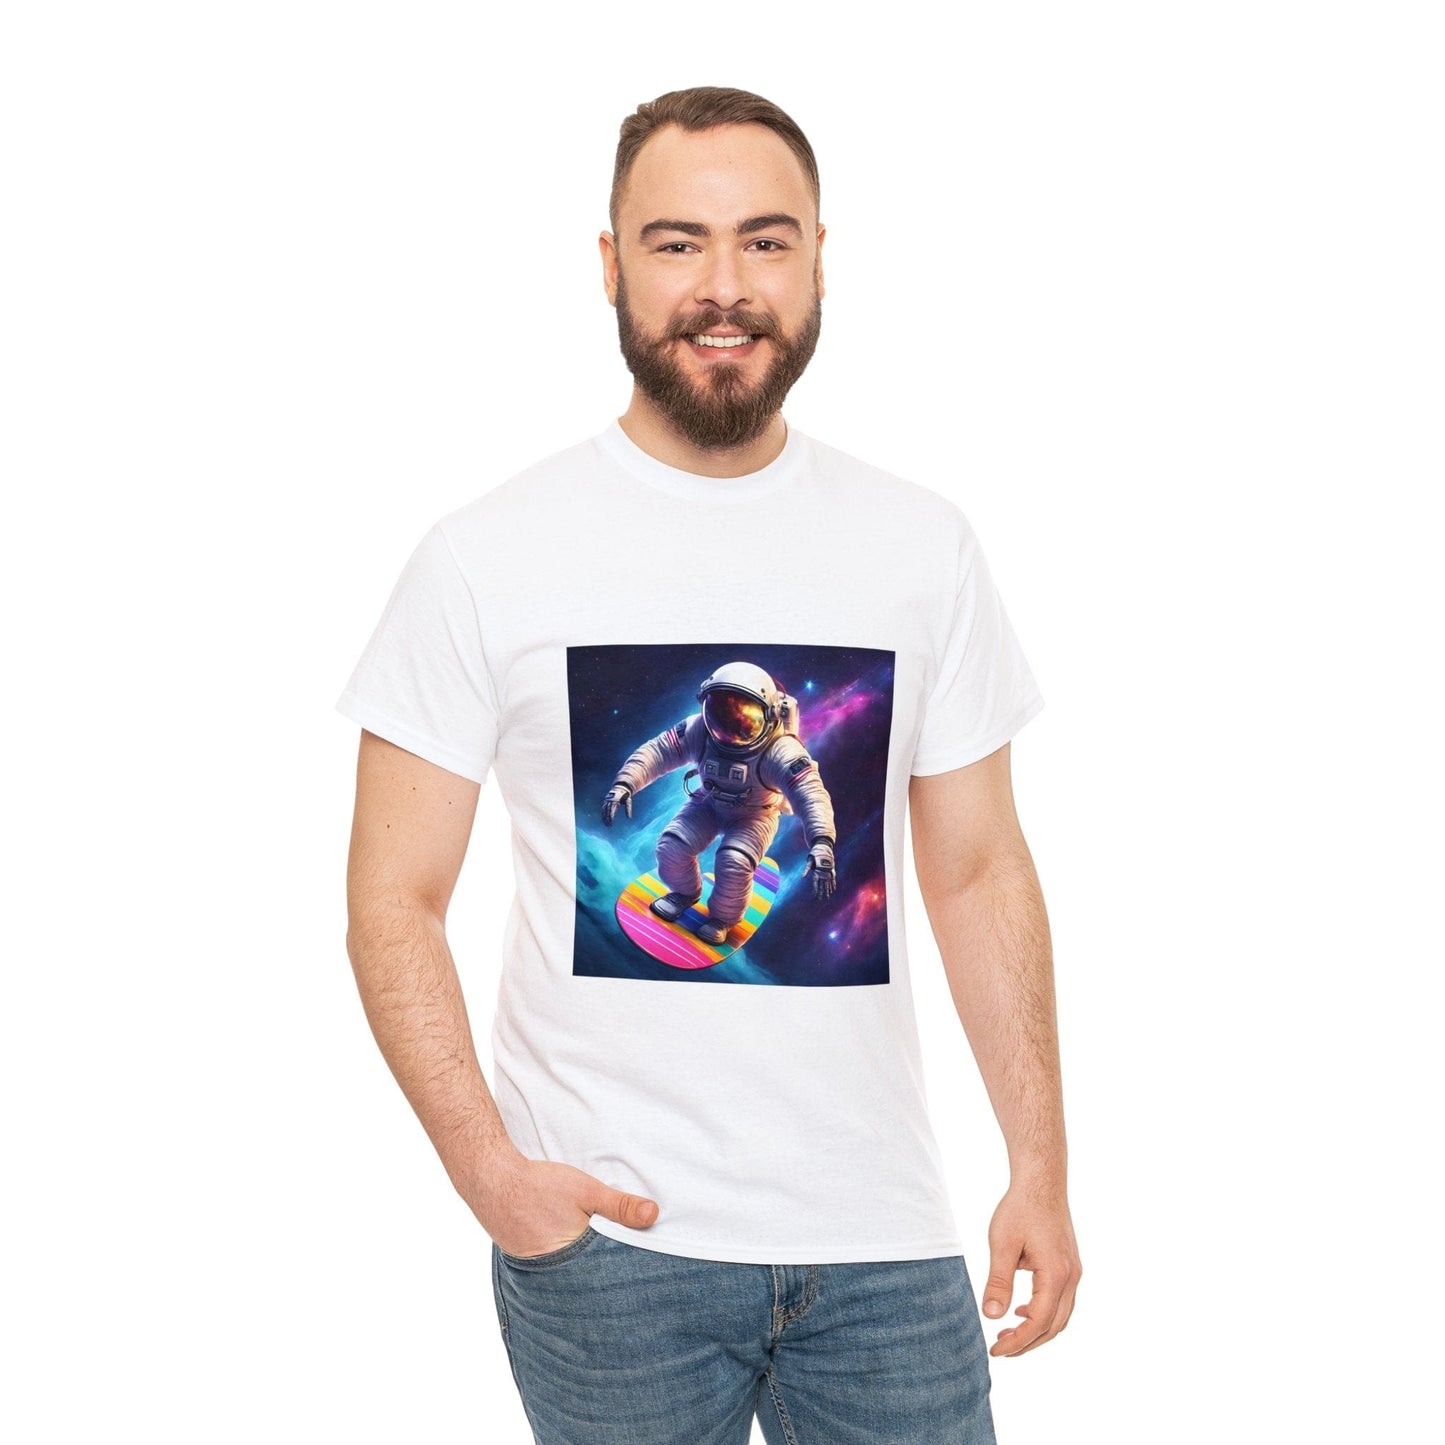 Astronaut Surfing Shirt, Space Shirt, Funny Astronaut Shirt, Spaceman Shirt, Birthday Gift, Surfing Outfit, Trendy Shirt, Skater Tee Unisex Flashlander